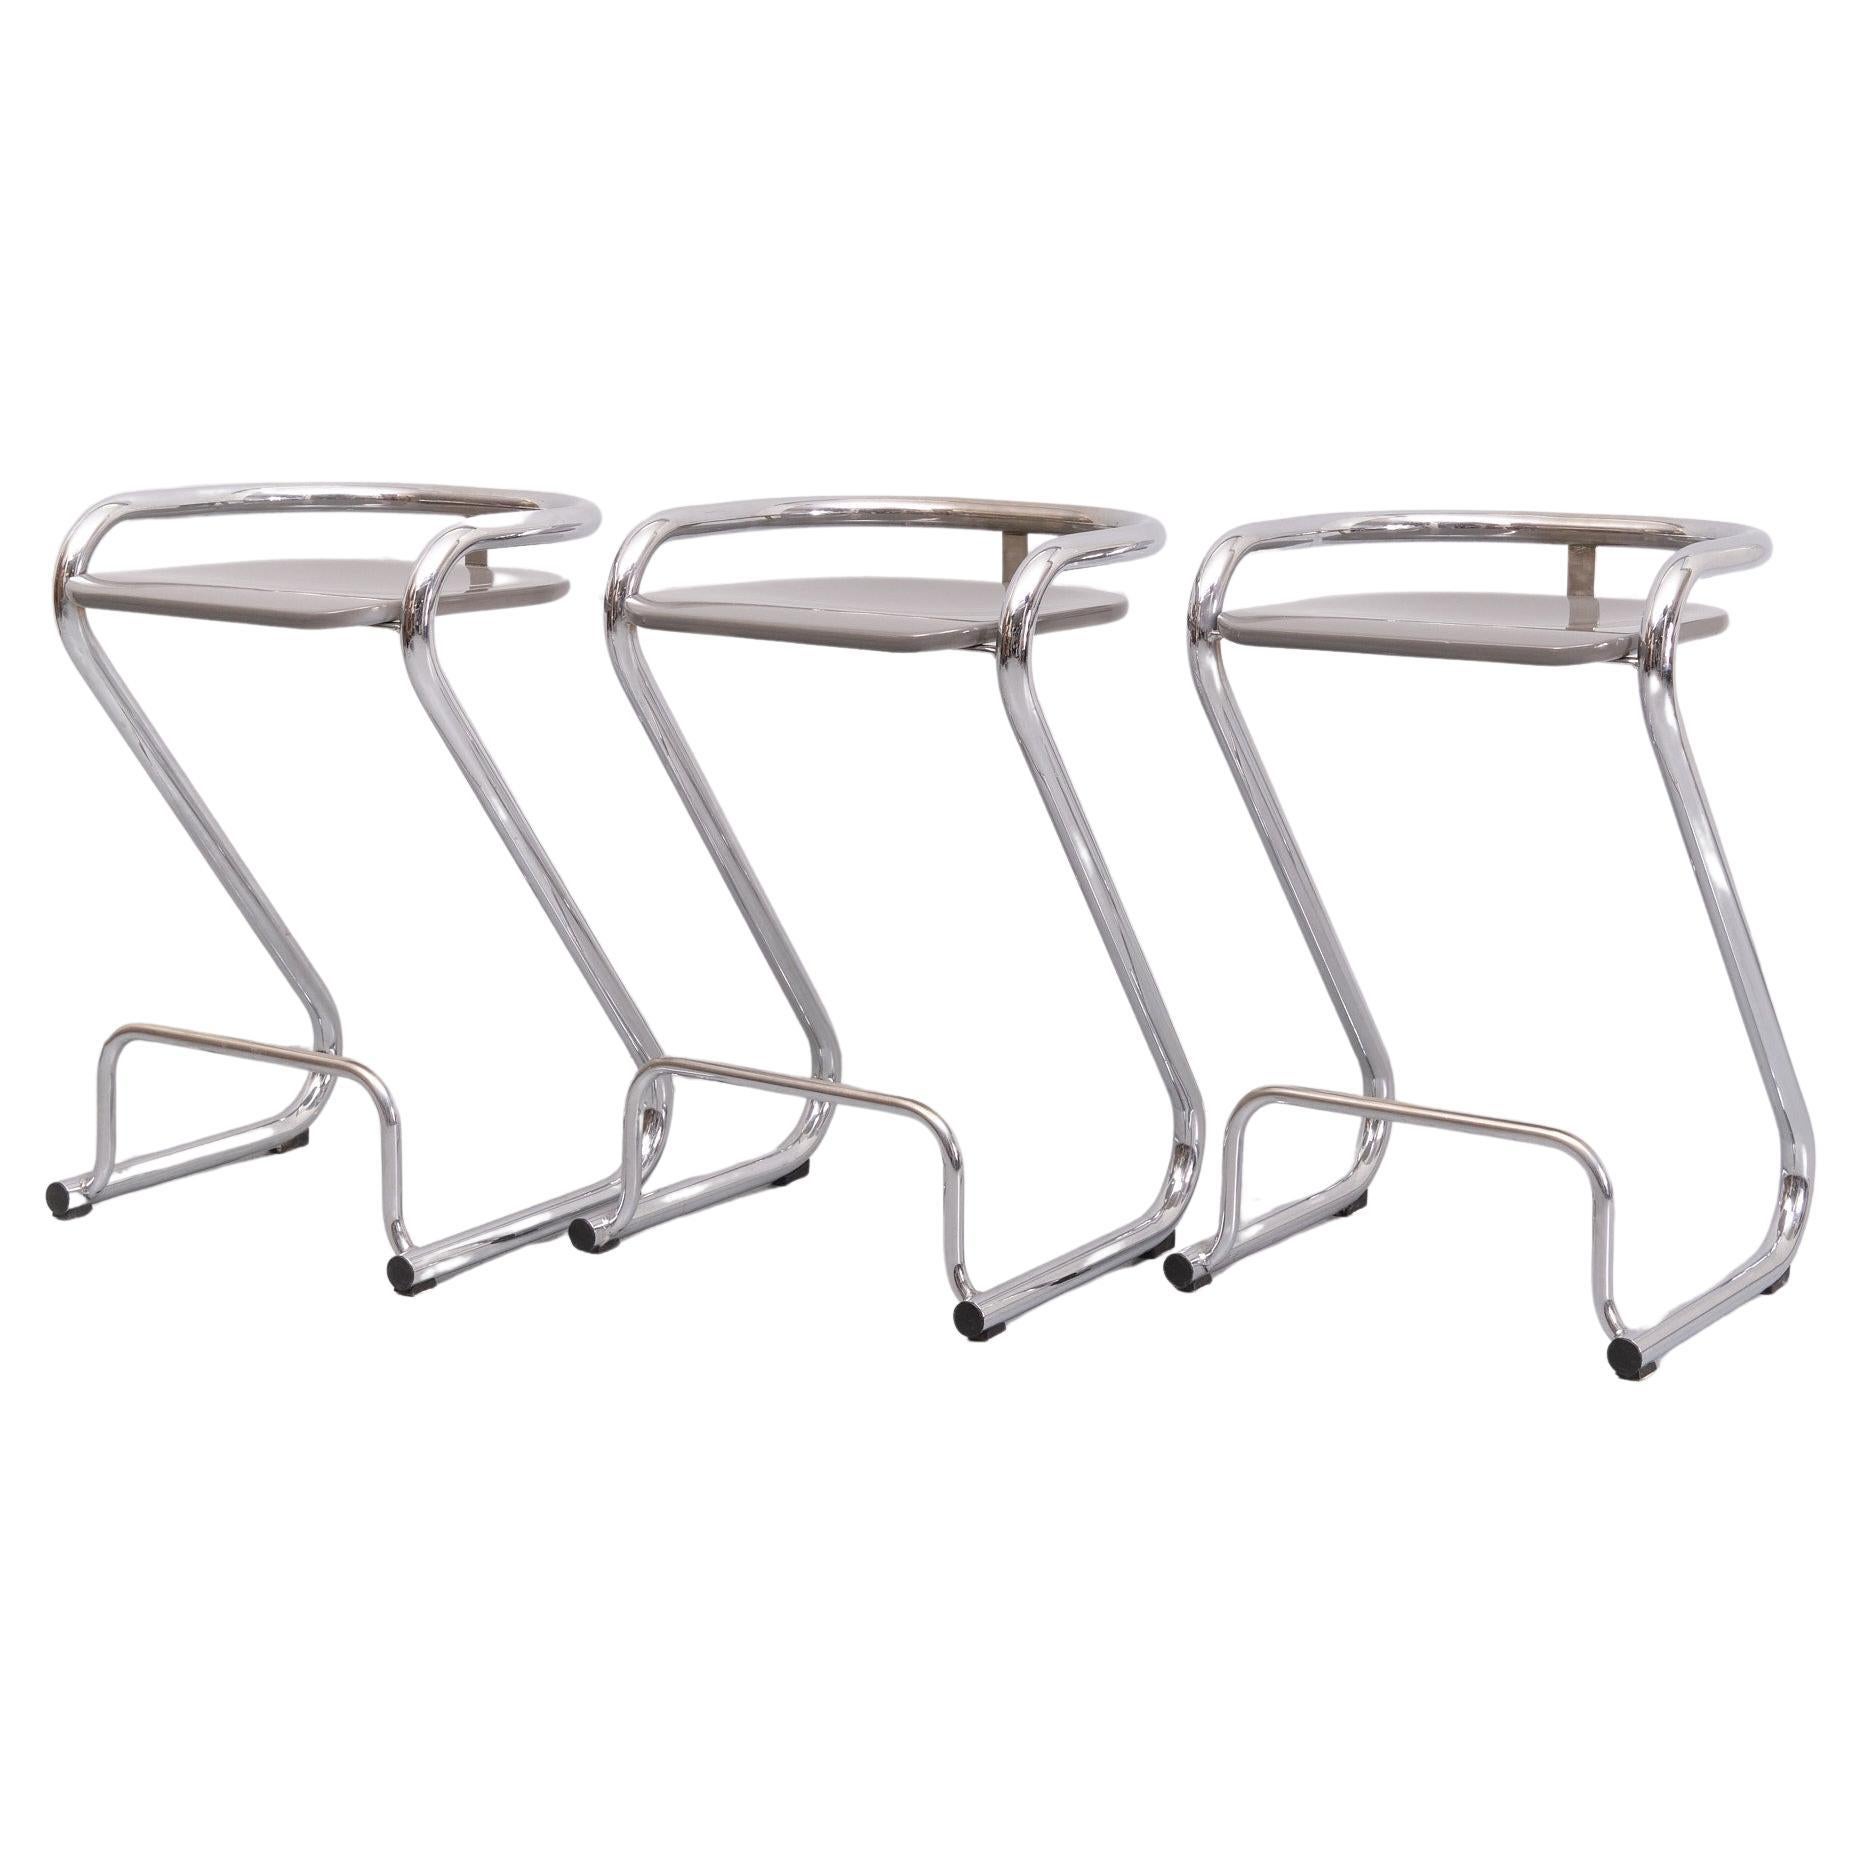 Set of 3 Bar stools S70-3 by Borge Lindau & Bo Lindekrantz for Lammhults  1960 